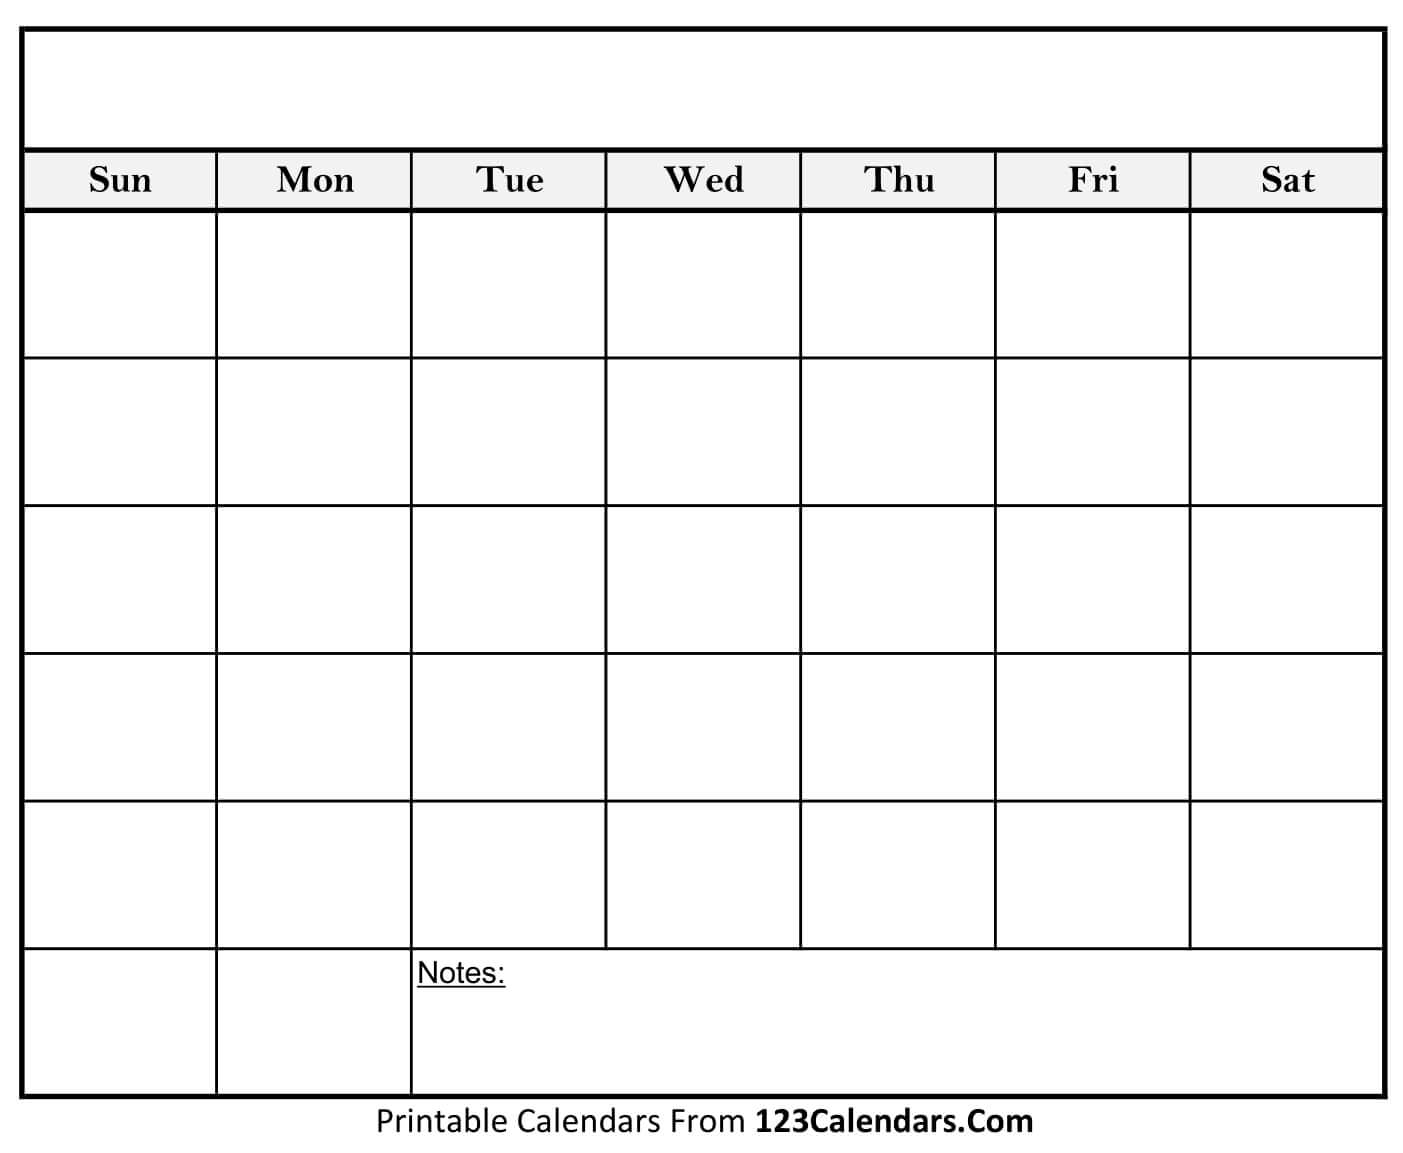 Free Printable Blank Calendar | 123Calendars Within Blank Calender Template